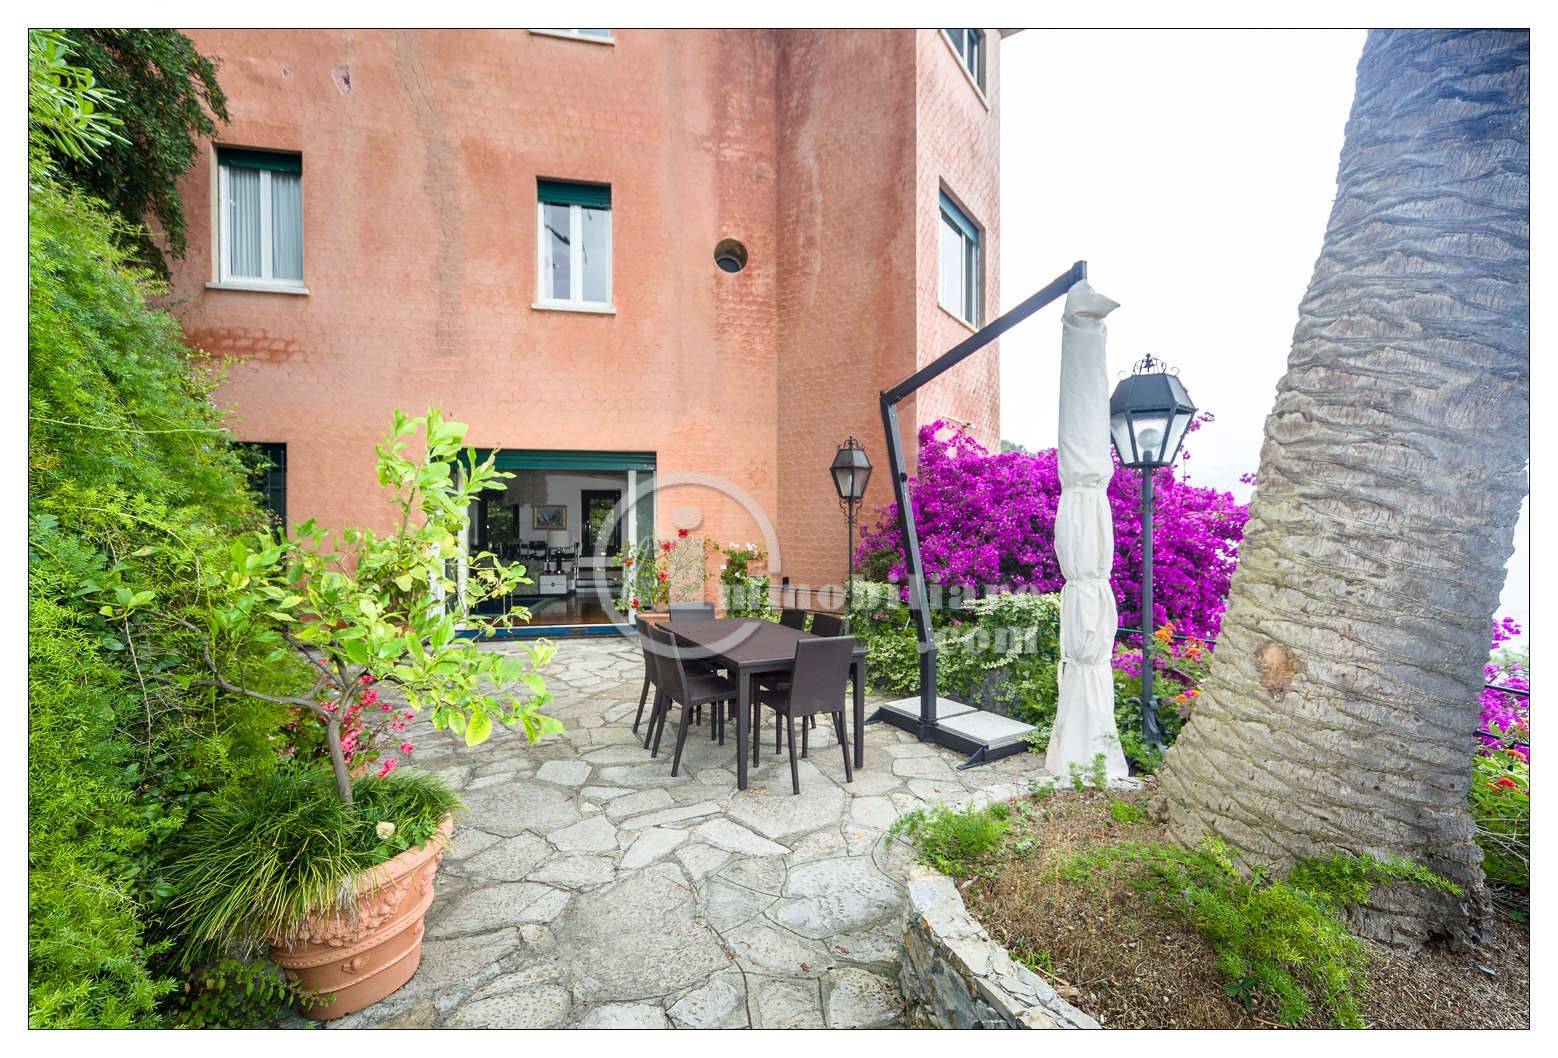 Villa in Vendita a Santa Margherita Ligure: 5 locali, 600 mq - Foto 5